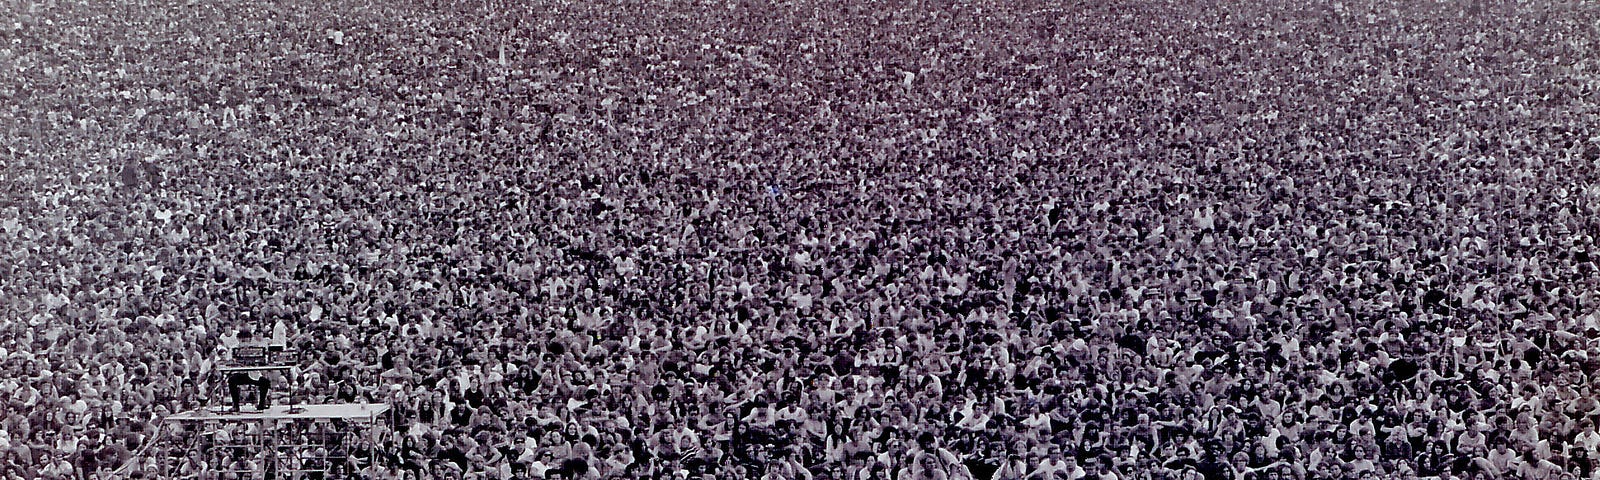 Opening ceremonies at Woodstock 1969